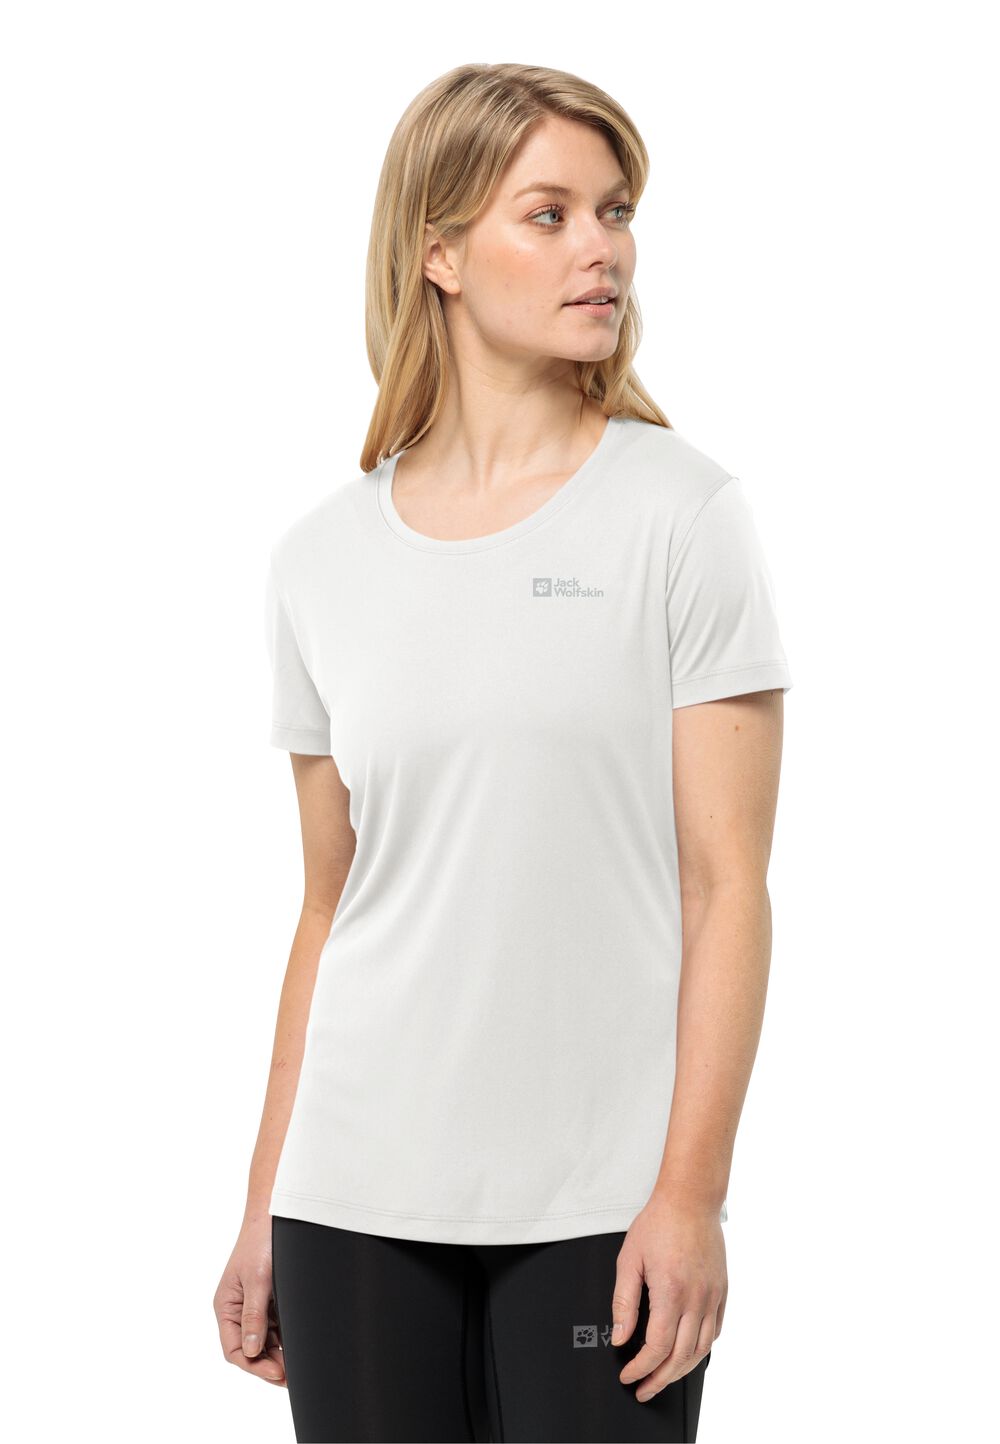 Jack Wolfskin Tech T-Shirt Women Functioneel shirt Dames L wit stark white